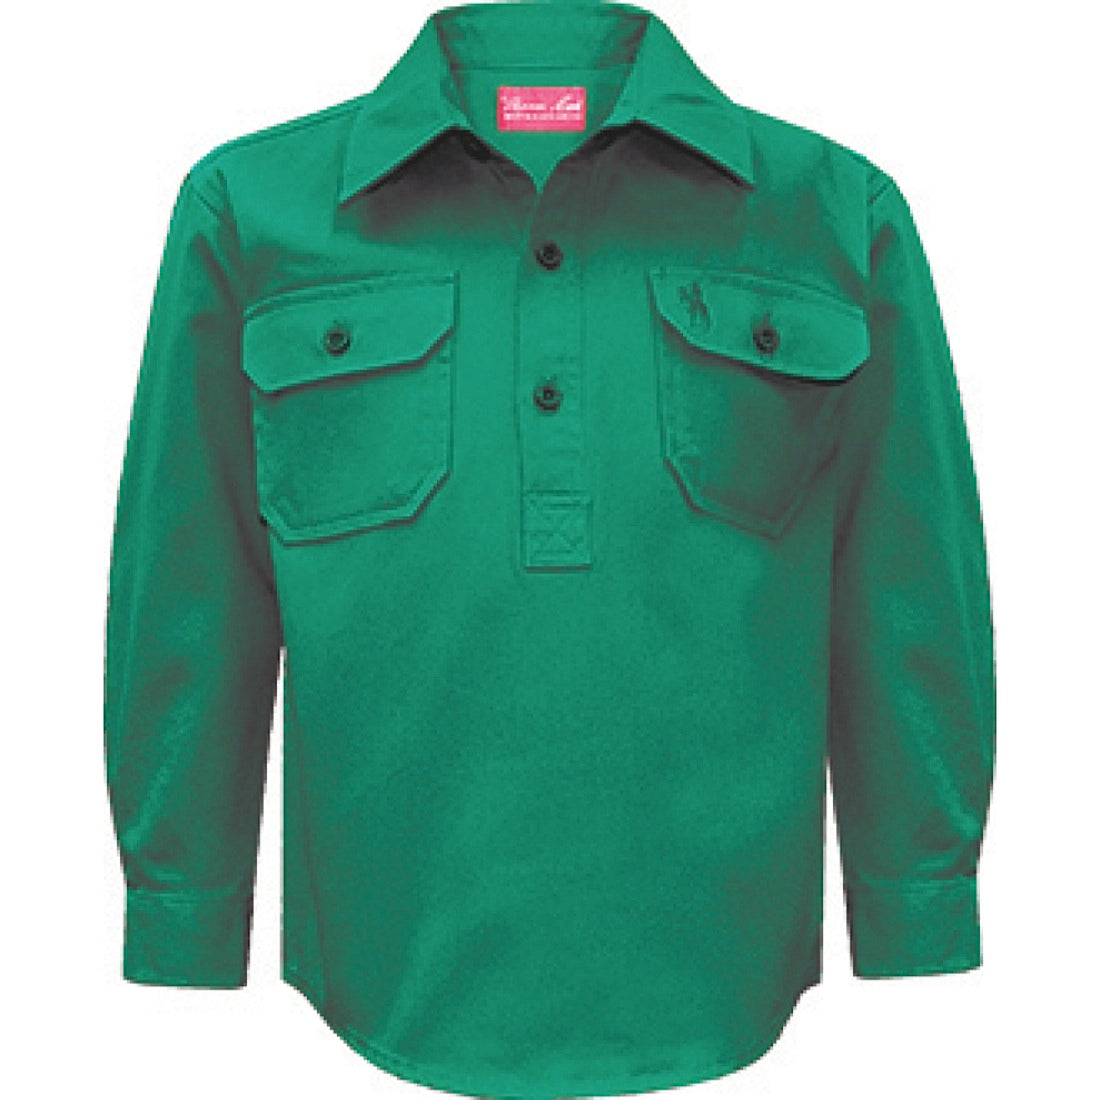 Thomas Cook Kids Heavy Cotton Drill 1/2 Plkt Shirt Bright Green